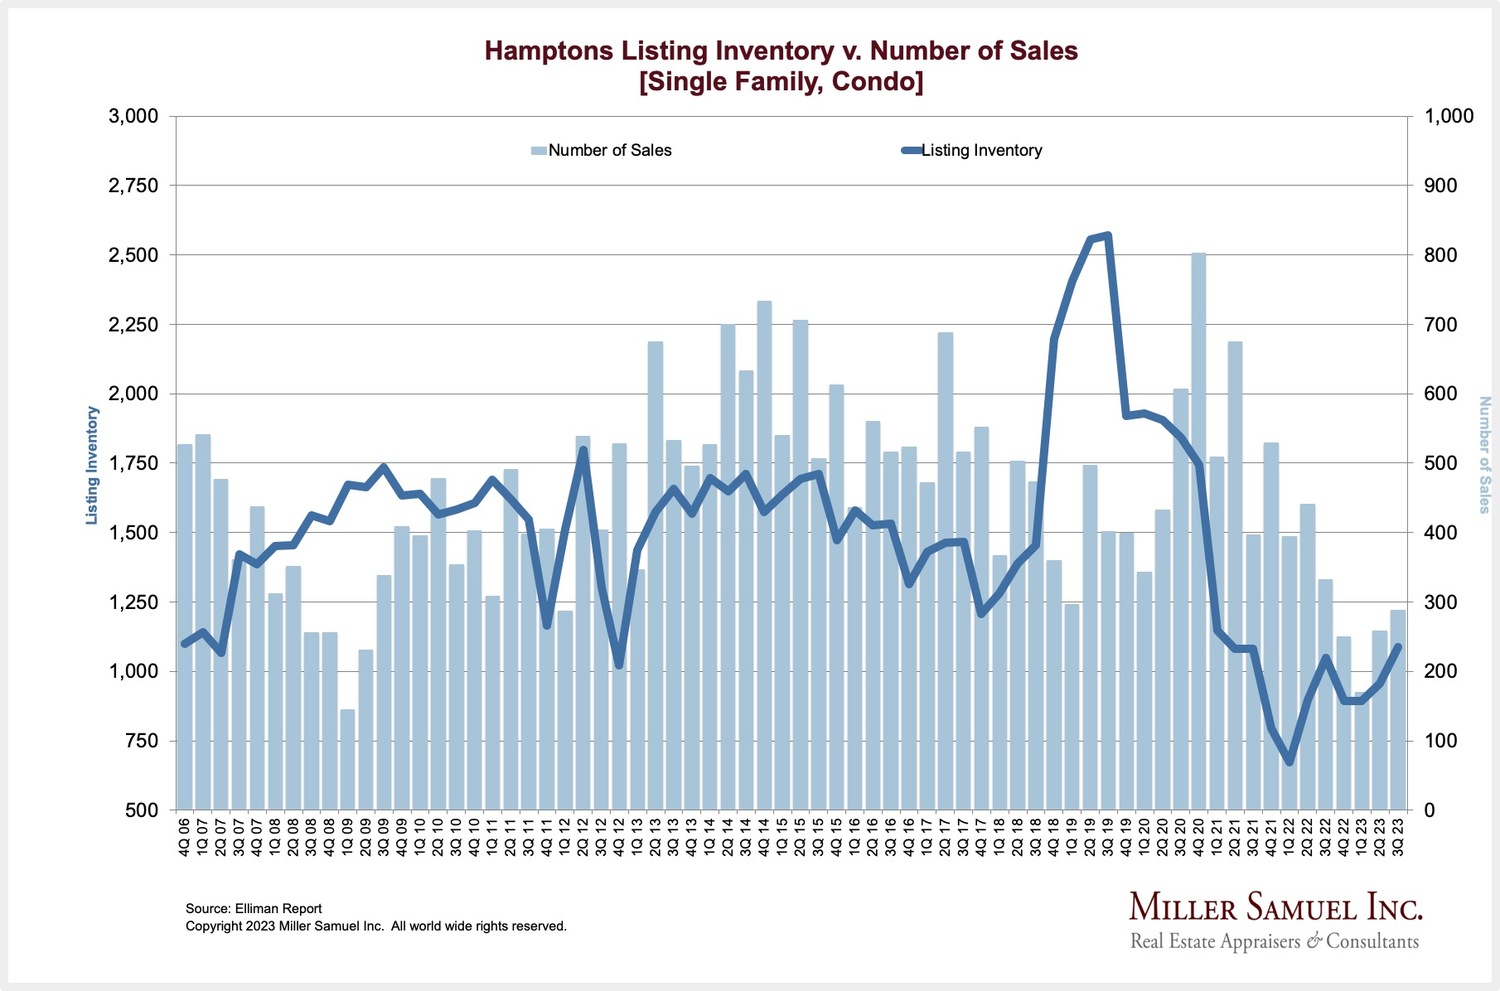 Inventory versus sales